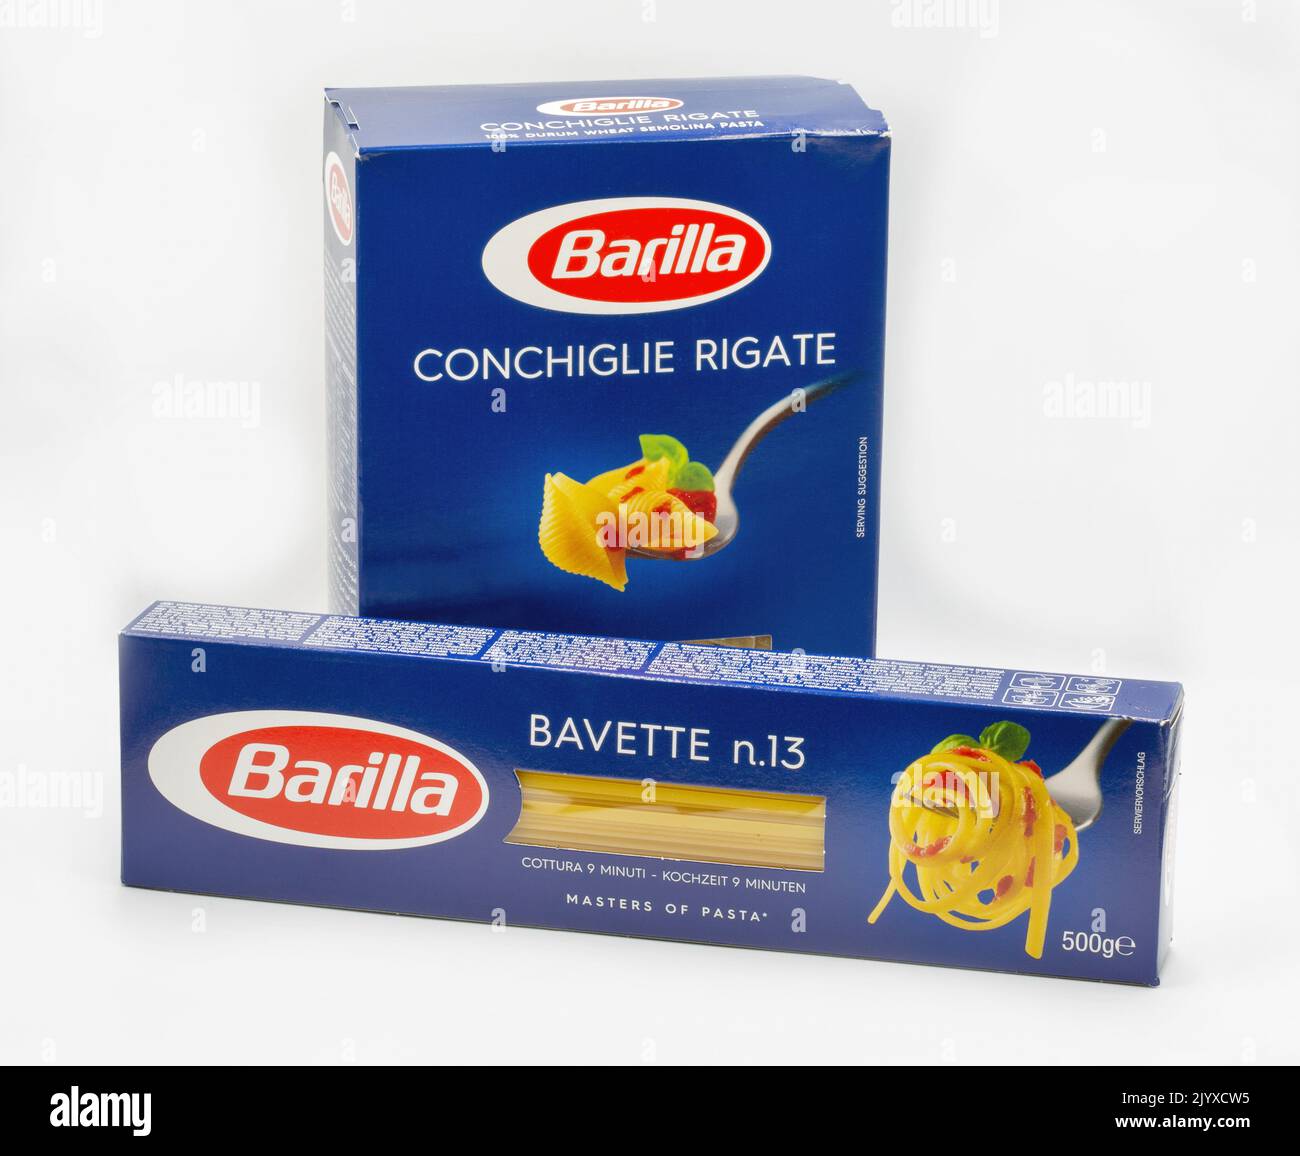 Kyiv, Ukraine - April 24, 2022: Barilla pasta shells Conchiglie Rigate and spaghetti Bavette n.13 packs closeup on white. Barilla S.p.A. is an Italian Stock Photo